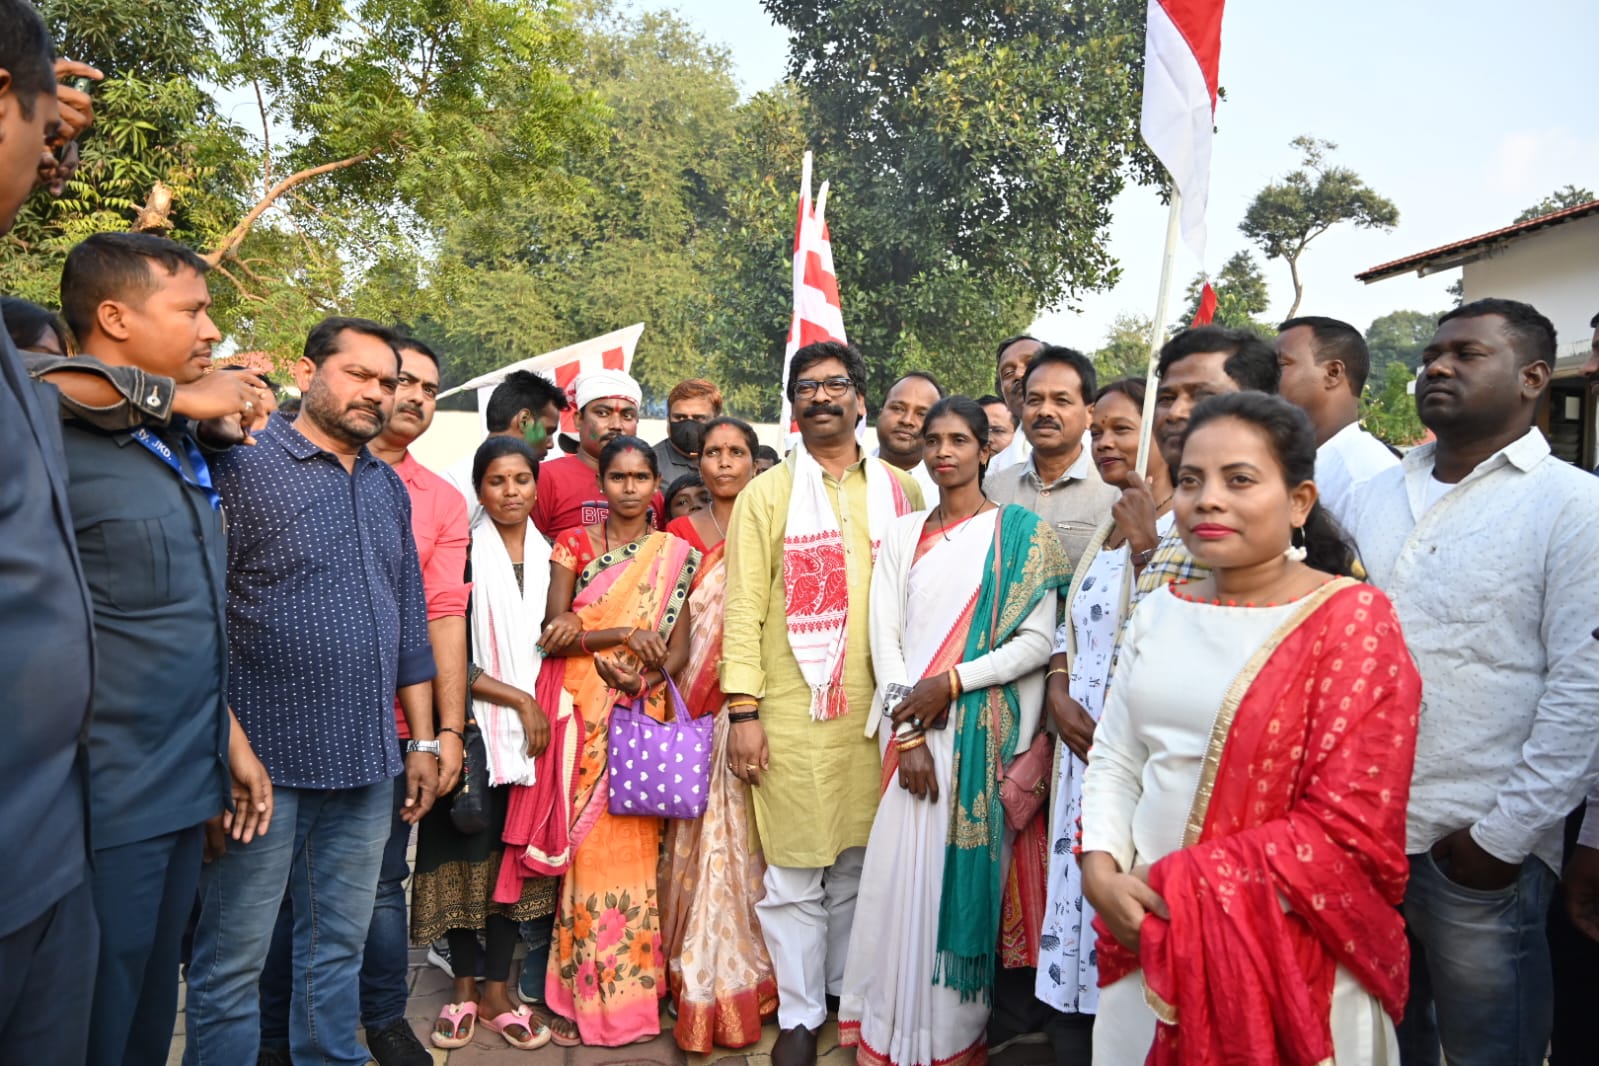 Celebration in Jharkhand